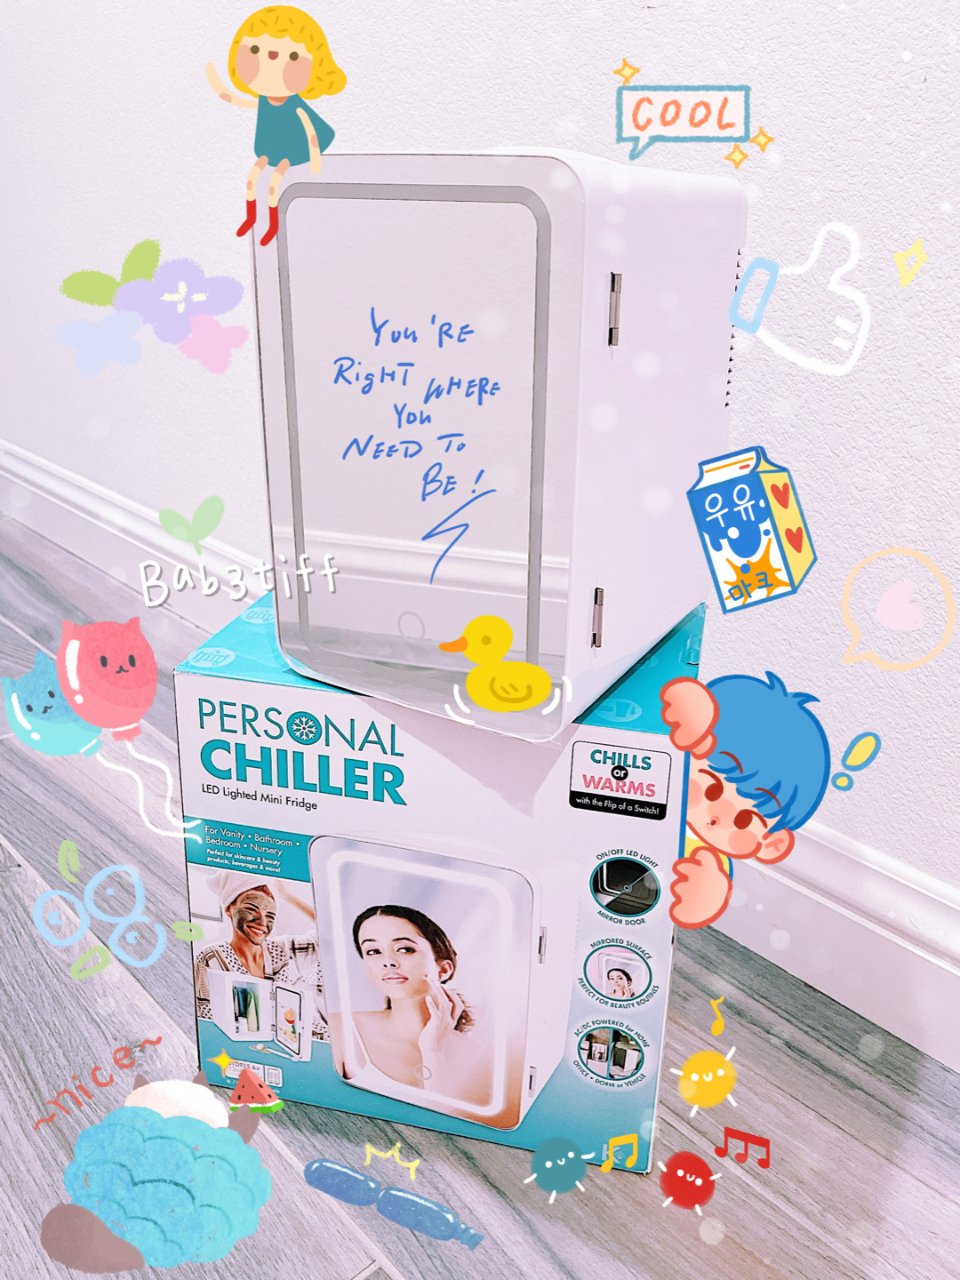 Mini小冰箱🧊触屏LED灯💡...